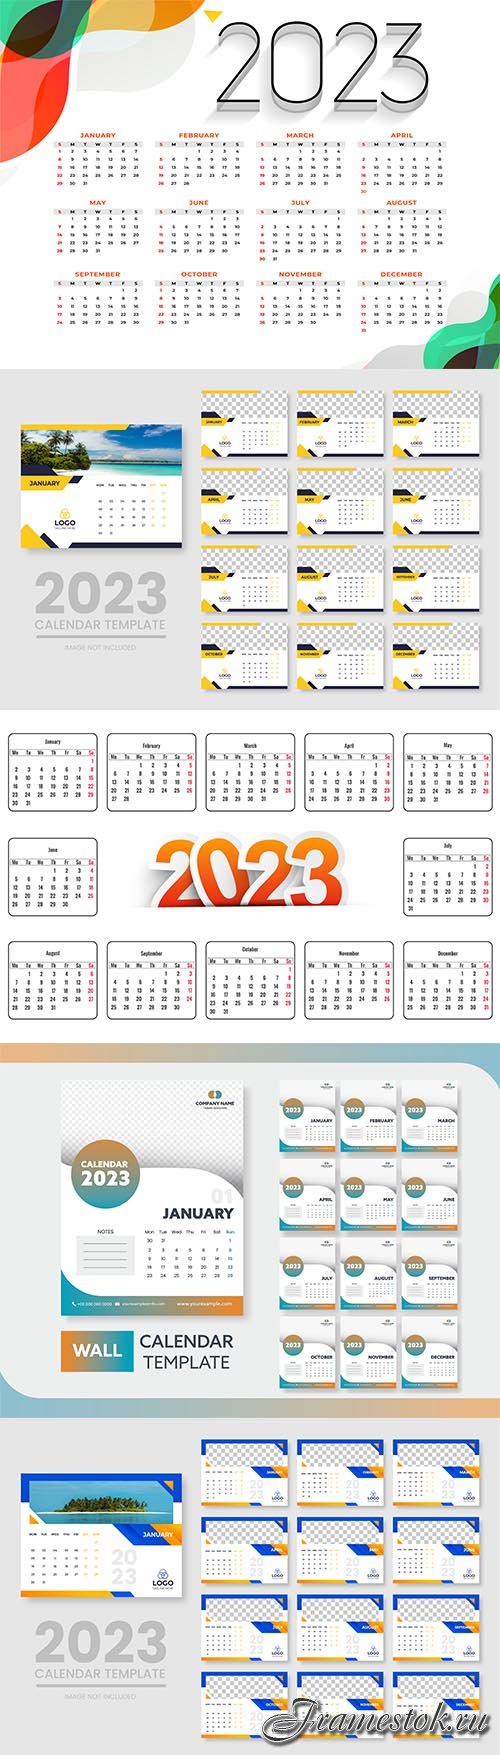 Abstract 2023 calendar template design